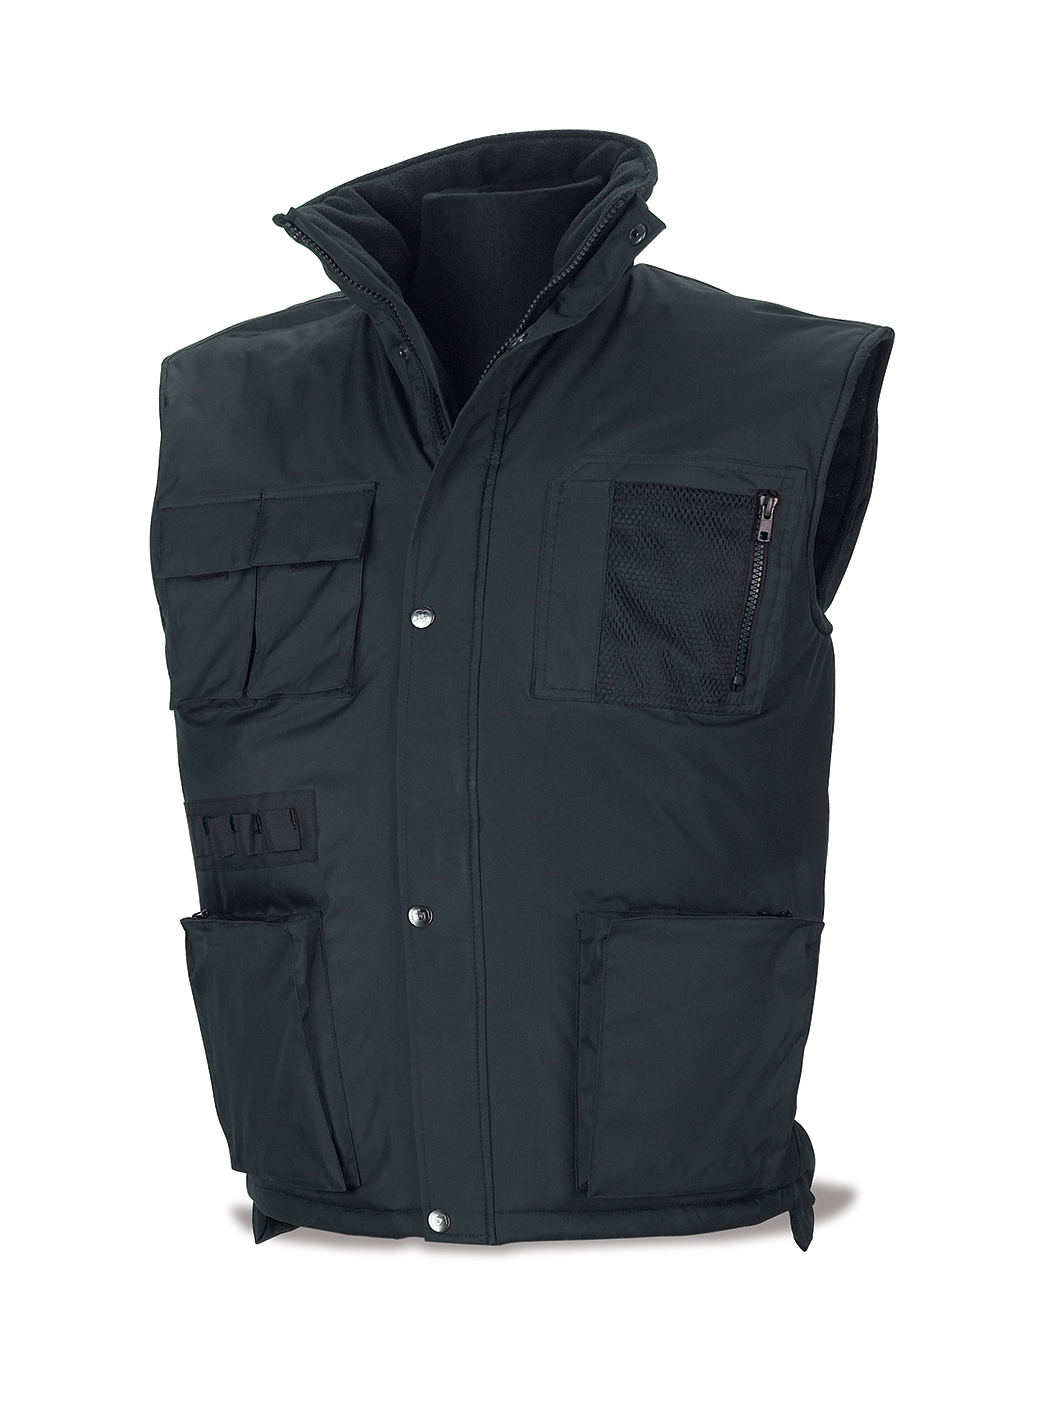 288-VPN Coats and Rain Gear Jackets SWAT Vest. Black